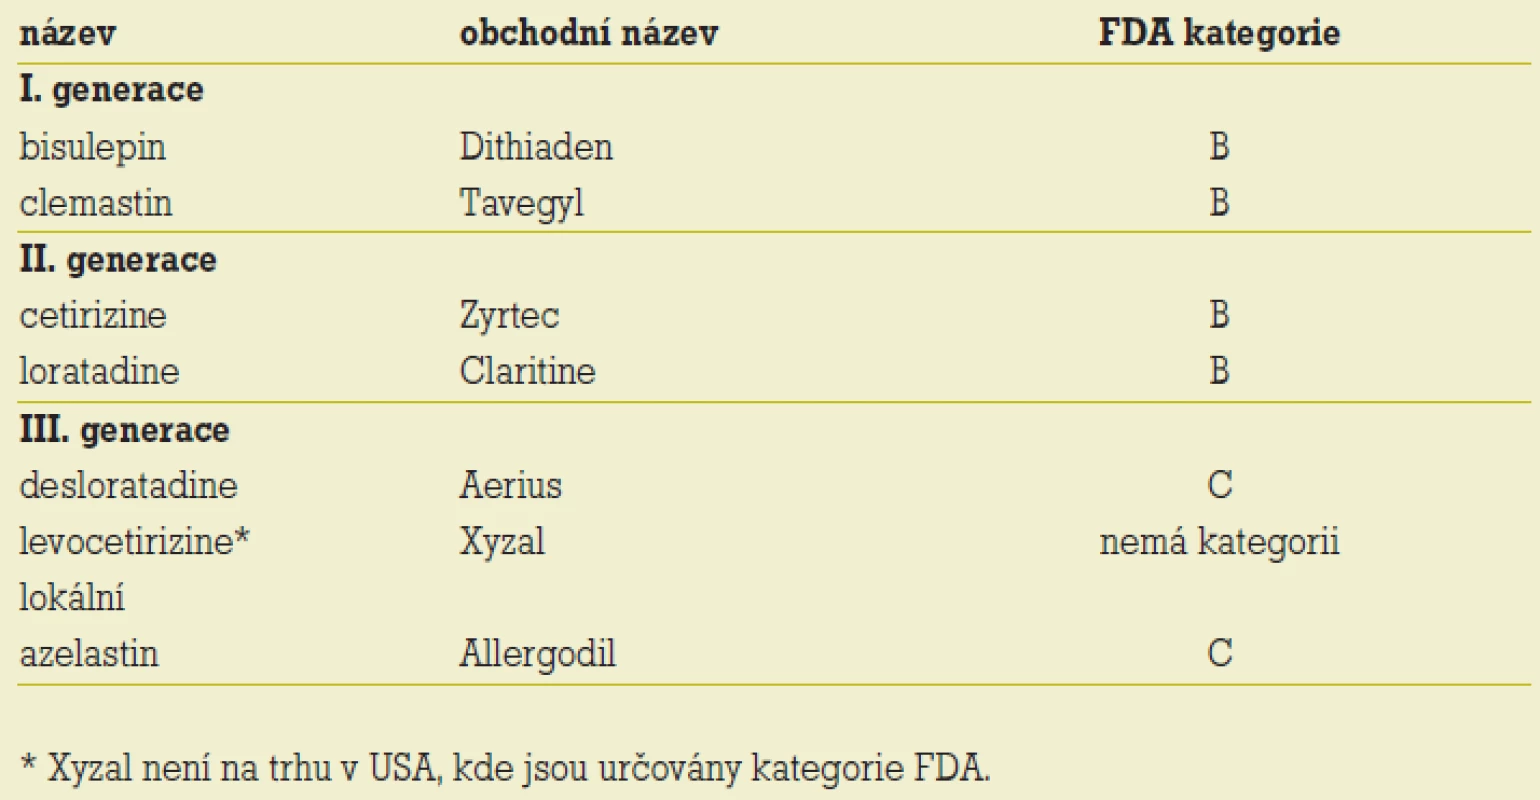 Antihistaminika podle kategorií FDA.